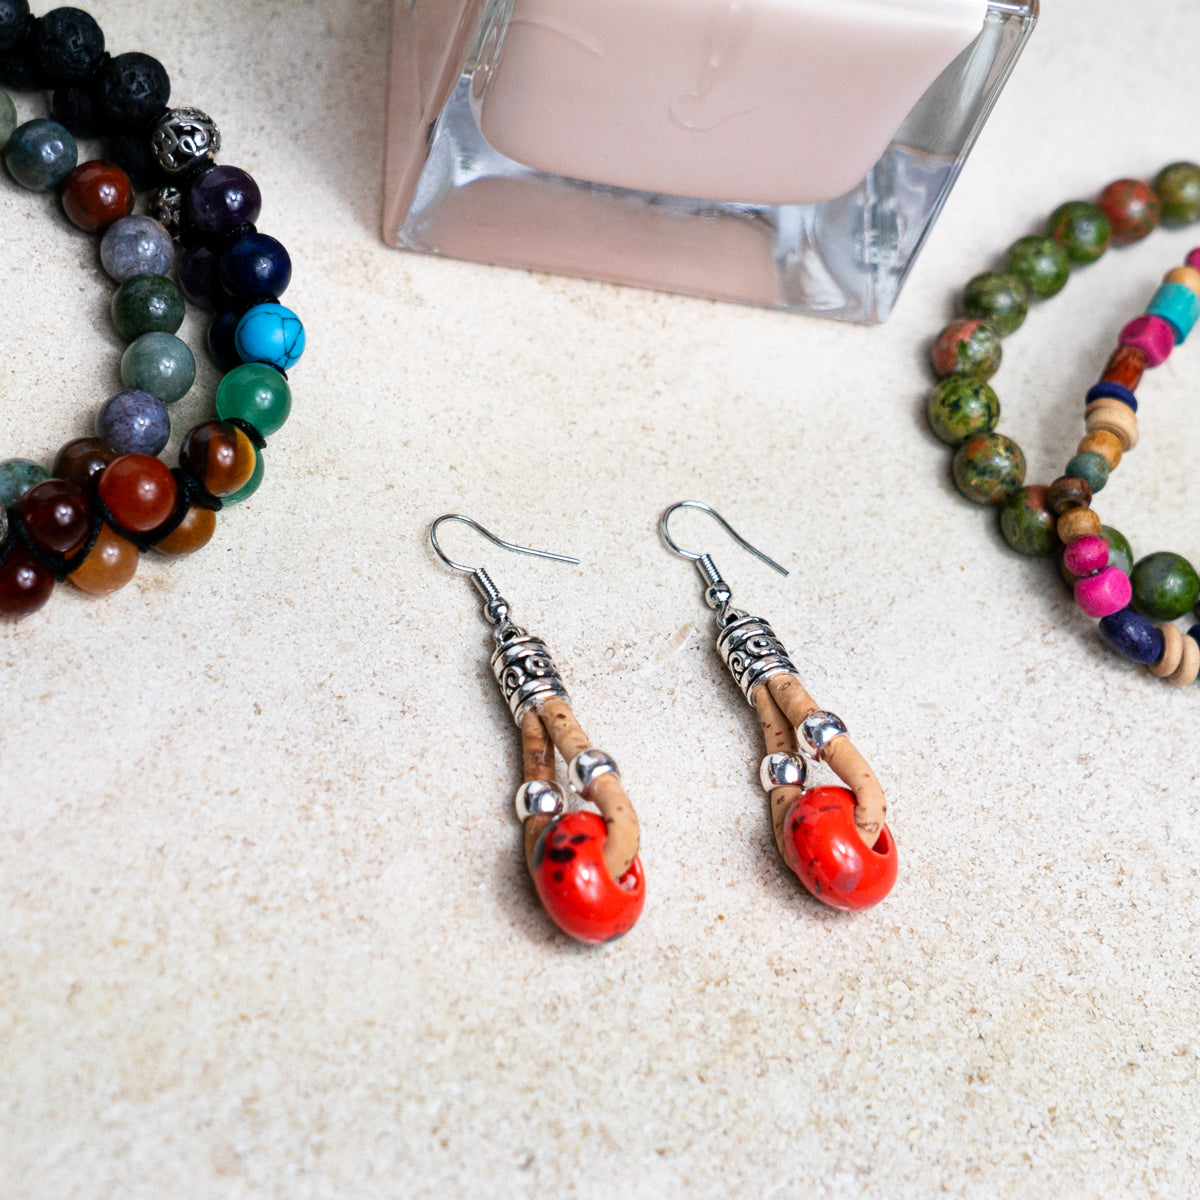 Natural Handmade Colorful Cork Earrings for Women ER-151-MIX-5